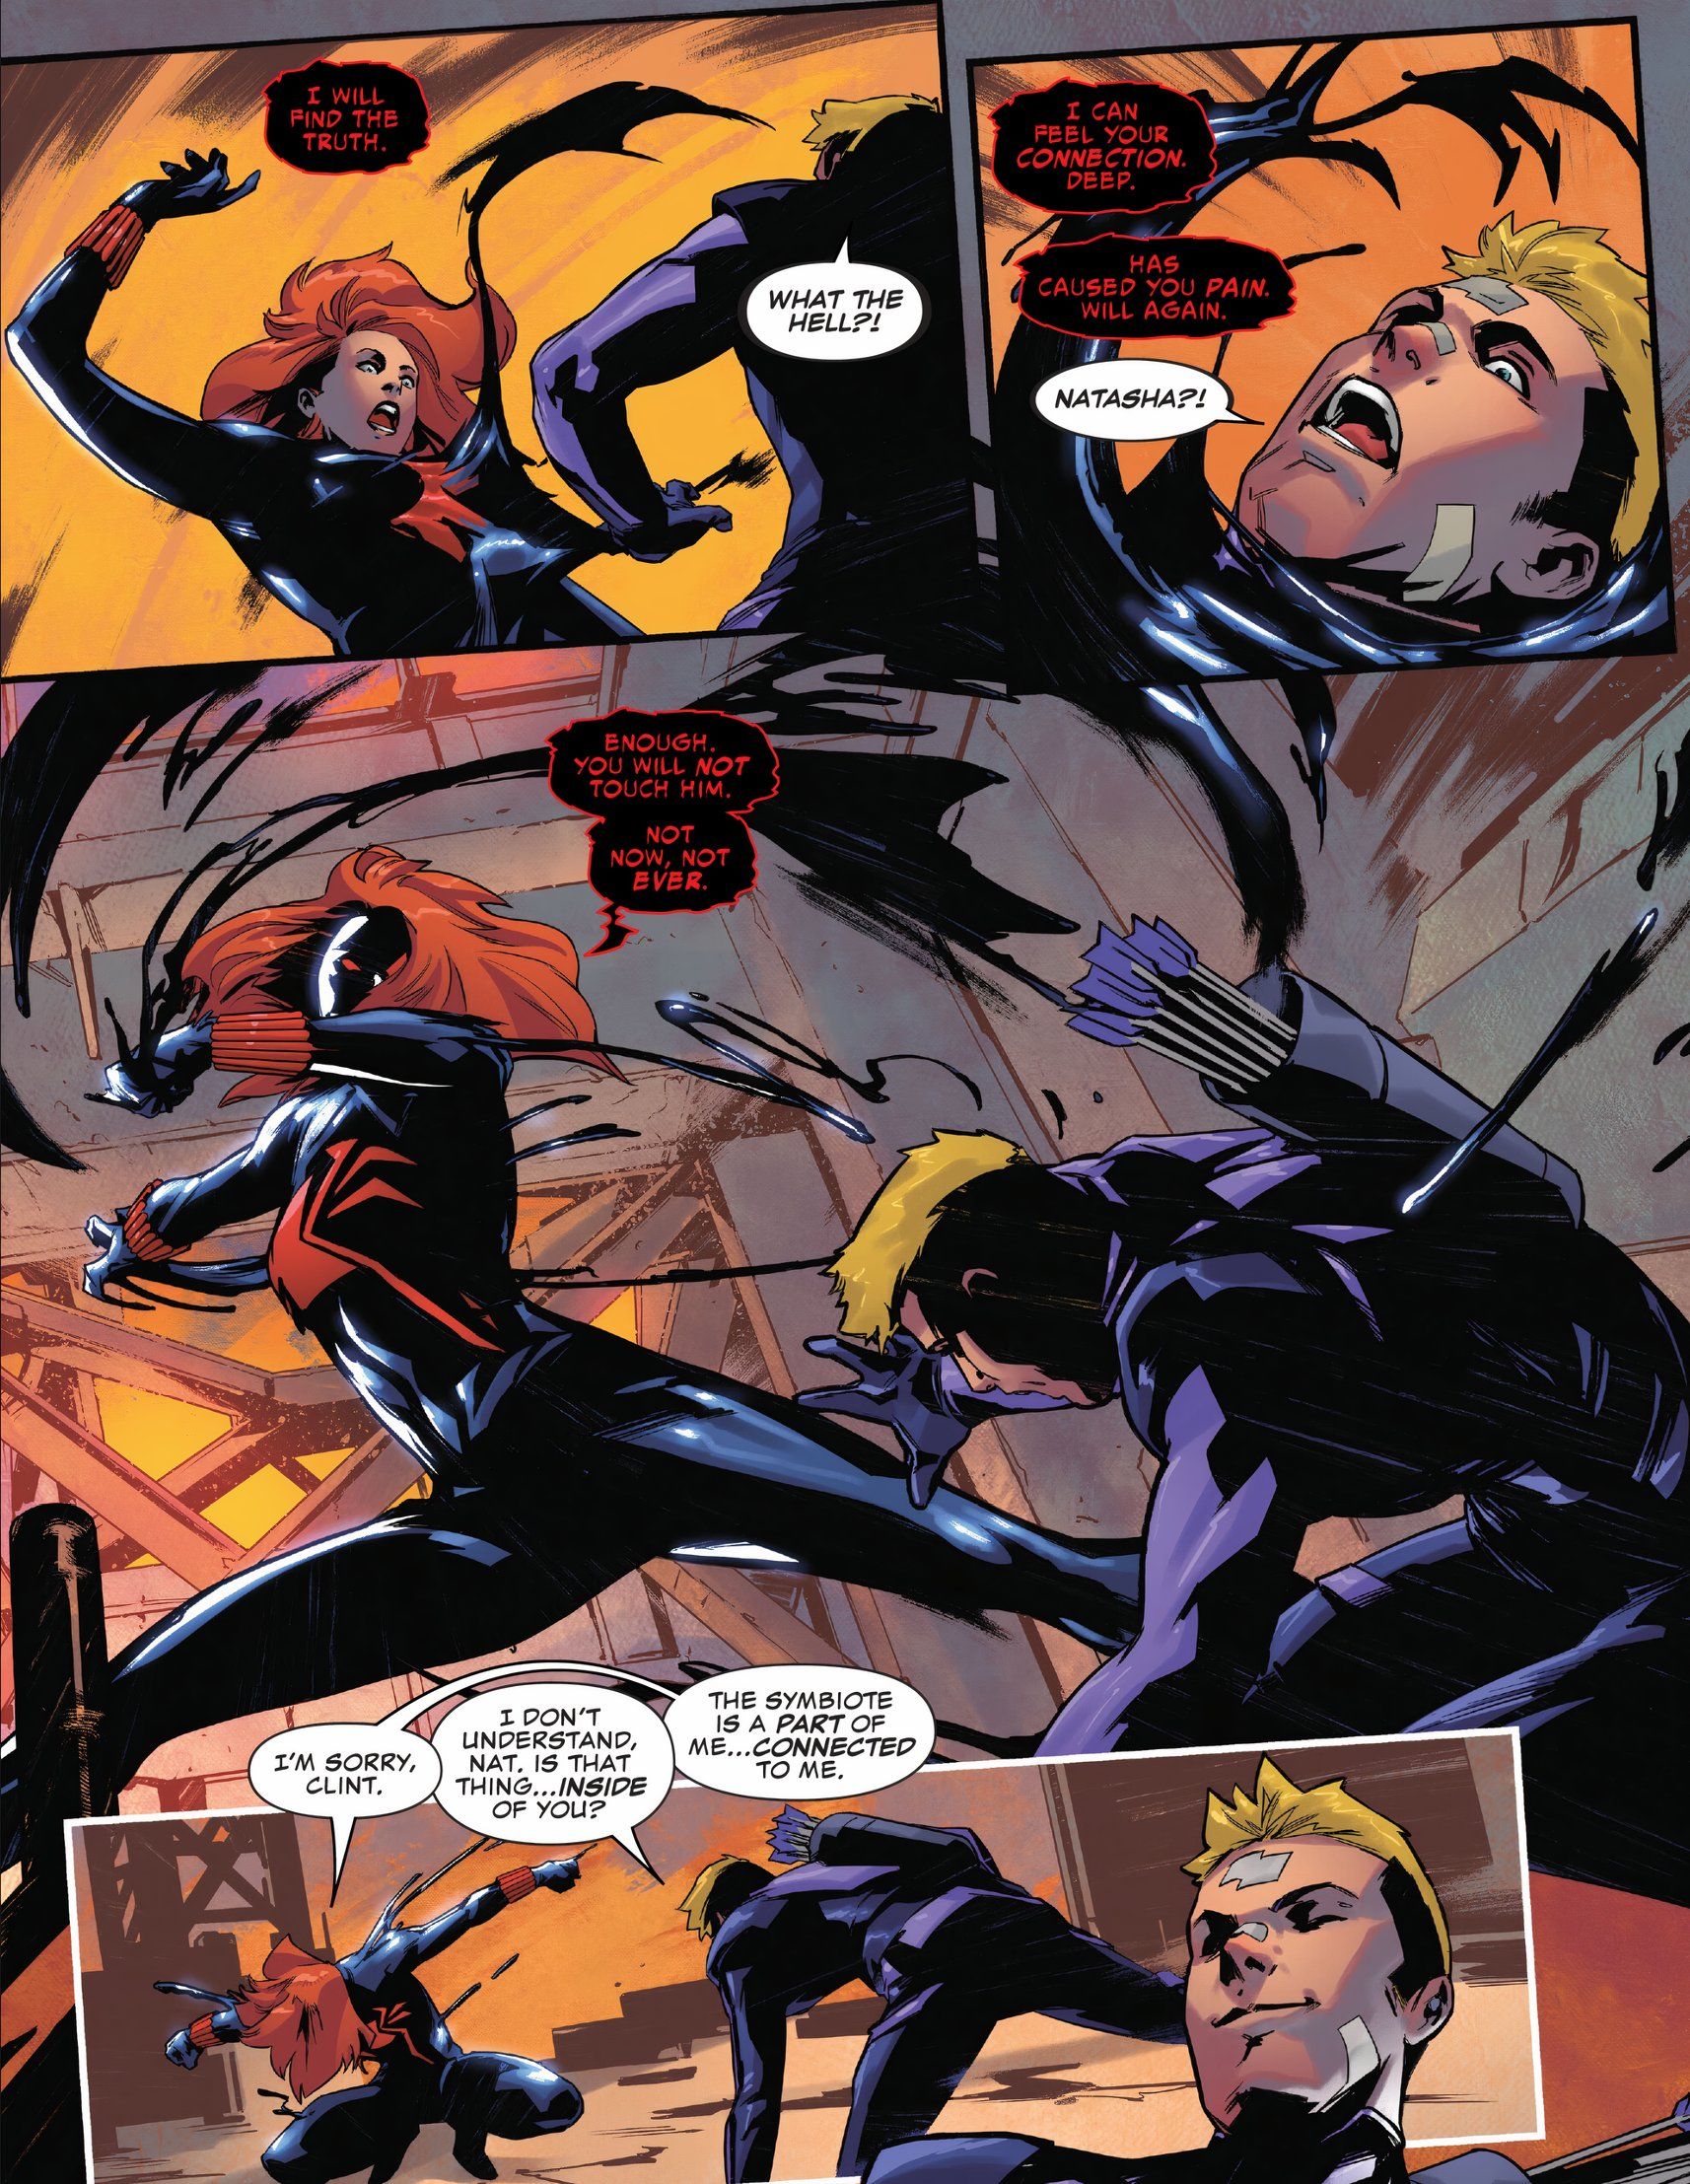 Natasha's symbiote lashes out at Hawkeye.